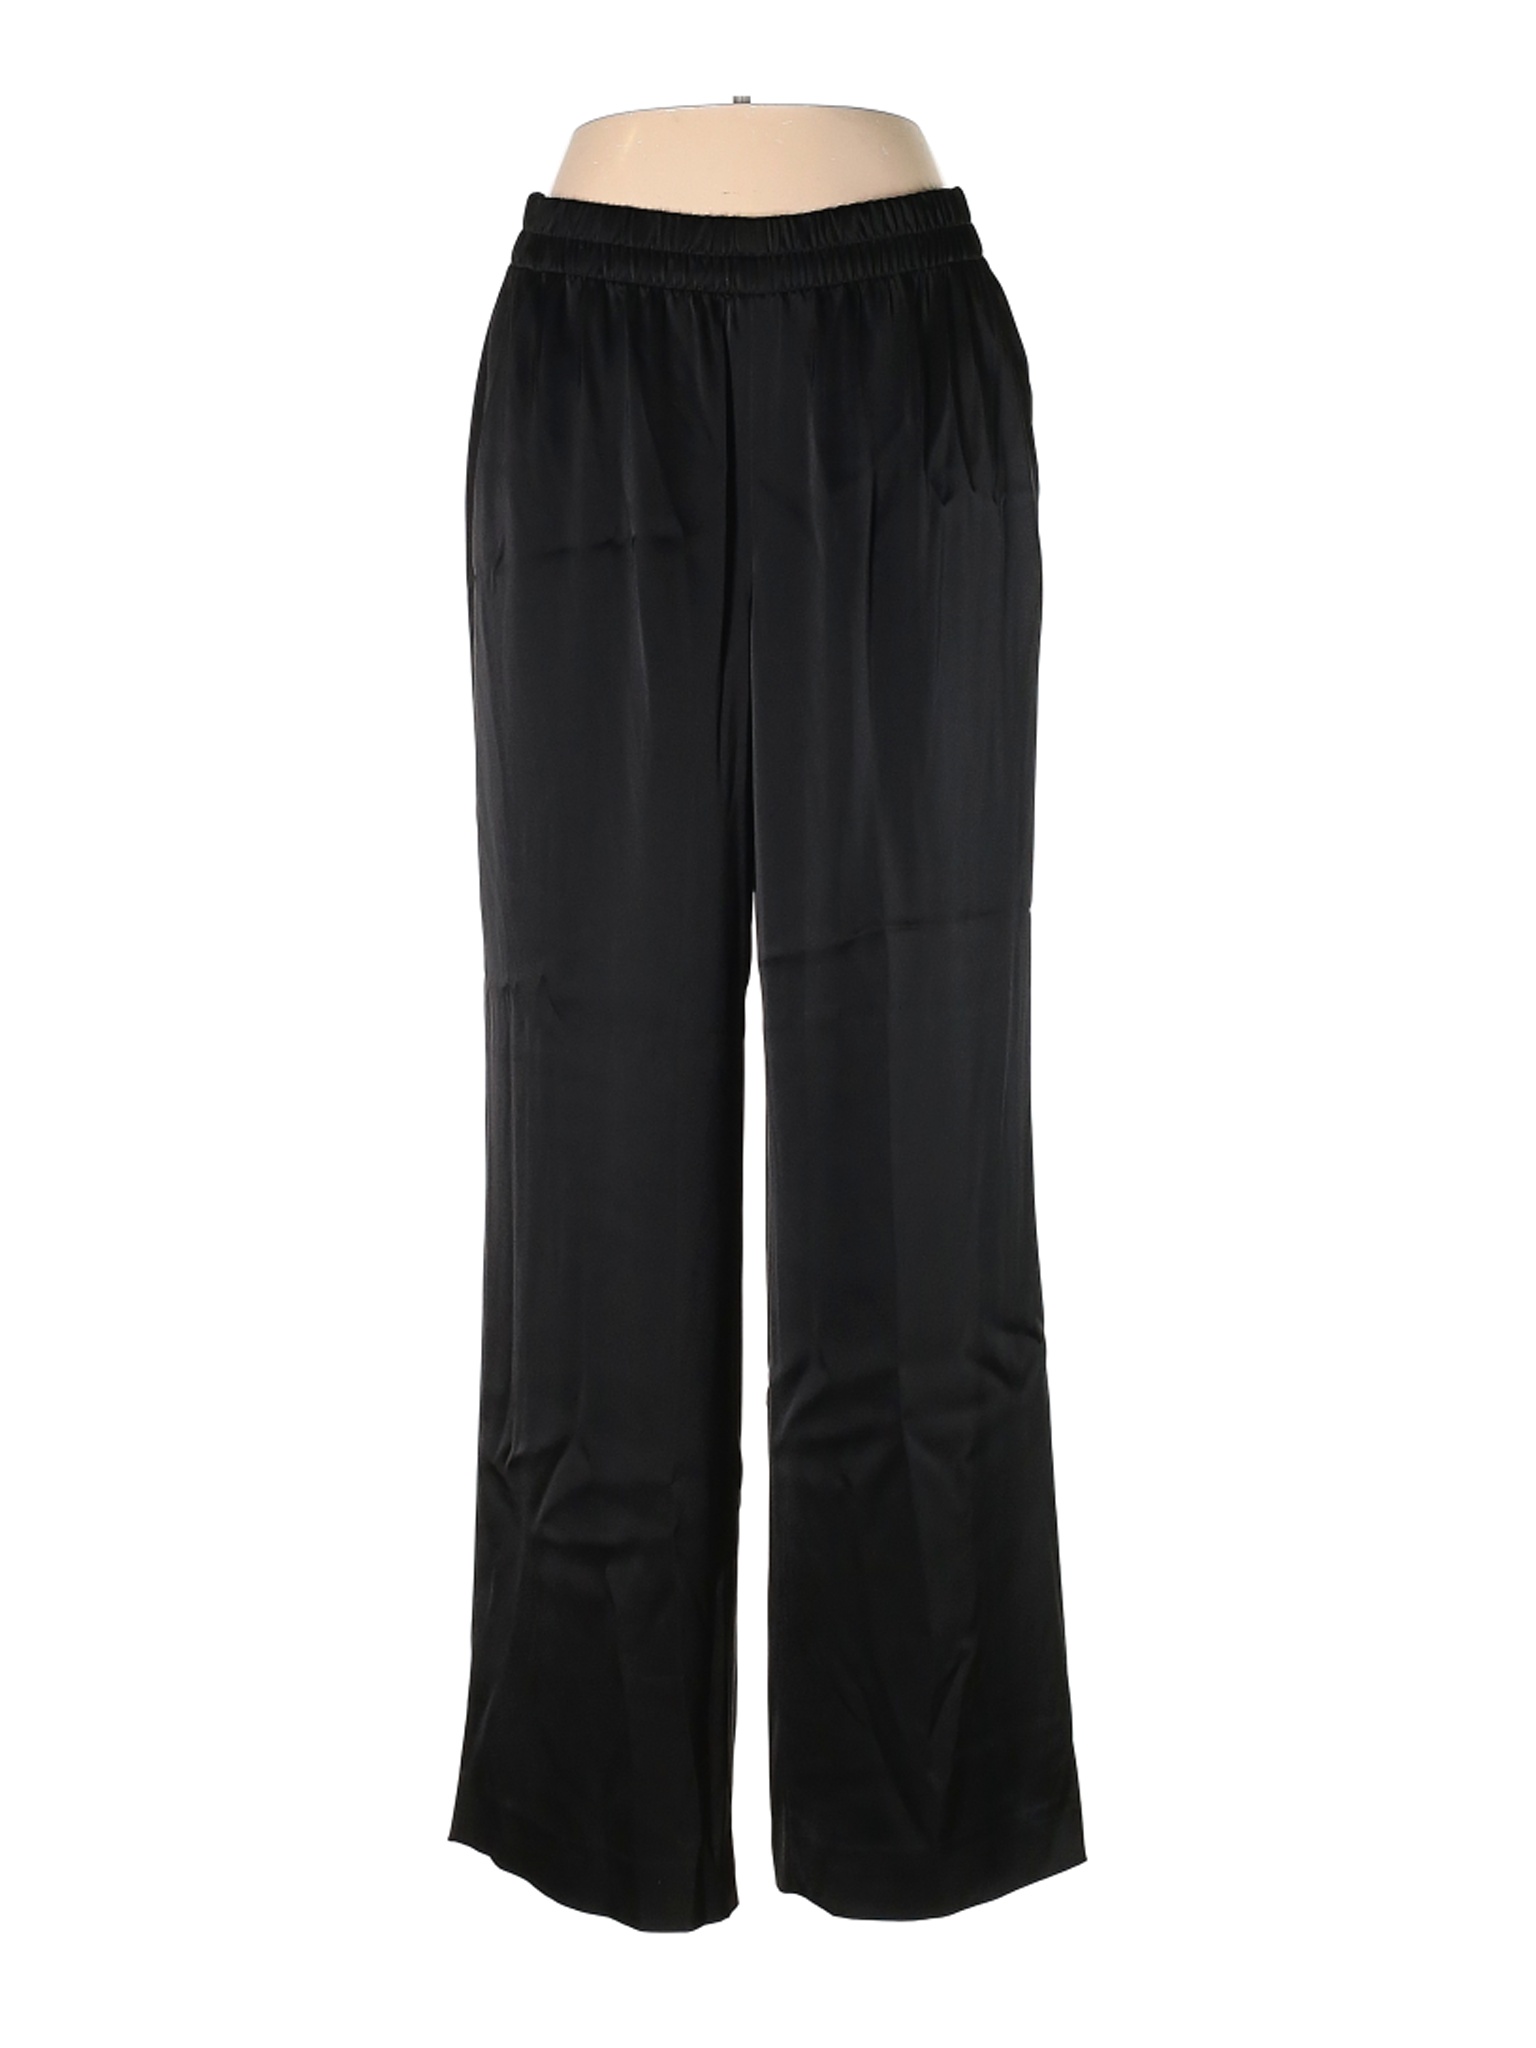 St. John Women Black Casual Pants L | eBay